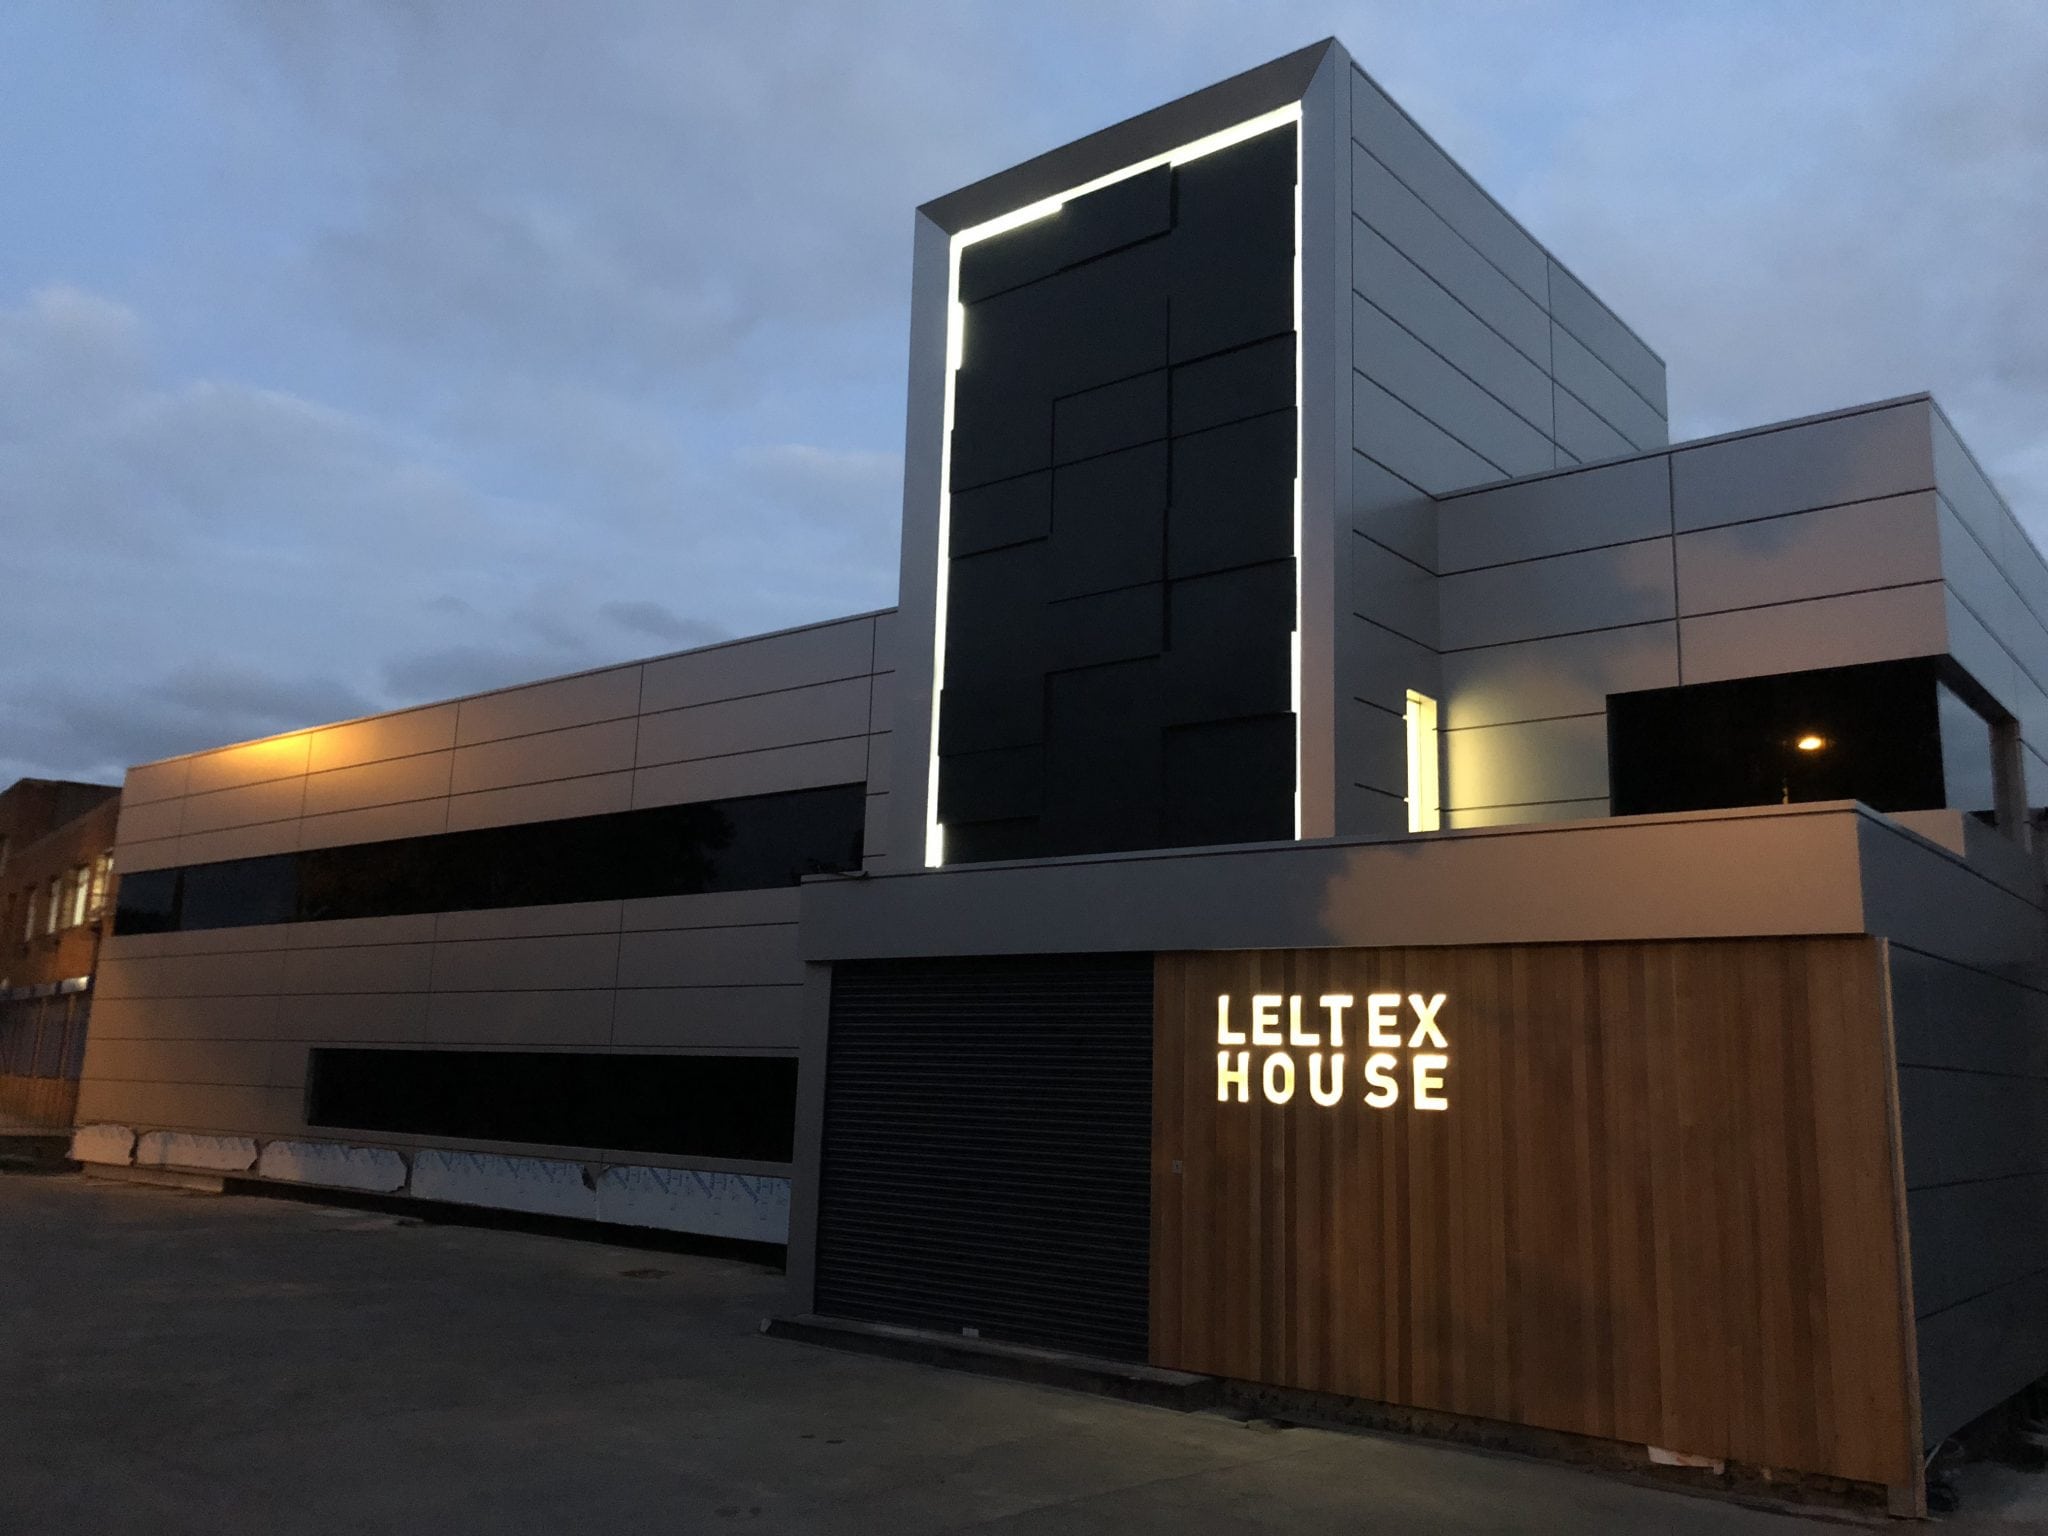 Leltex House, Manchester